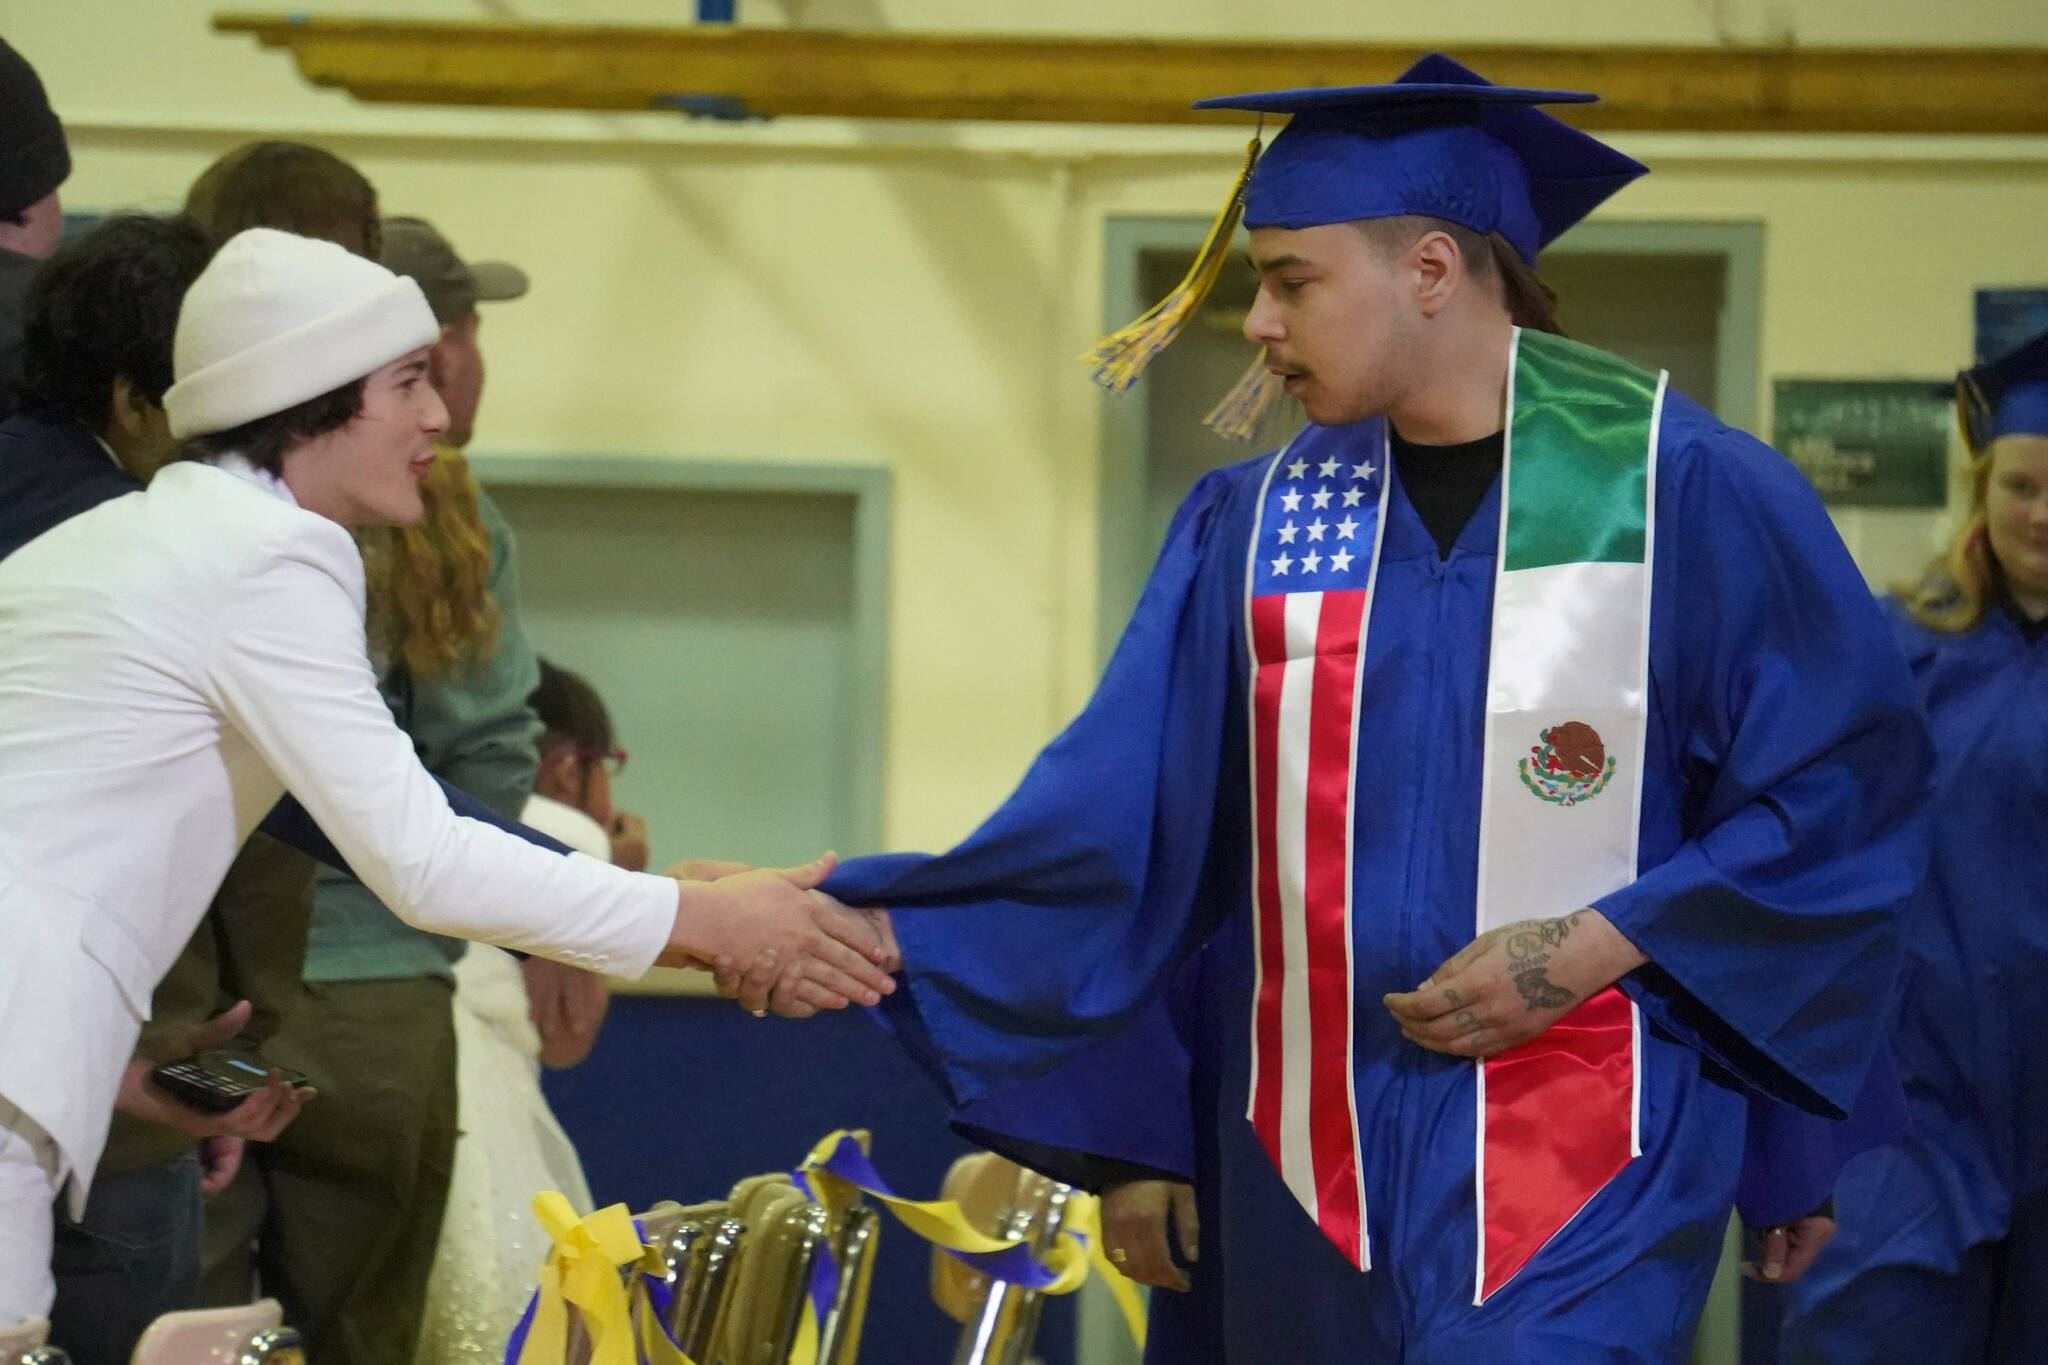 Graduates proceed into the gymnasium during a graduation ceremony on Monday, May 15, 2023, at Kenai Alternative High School in Kenai, Alaska. (Jake Dye/Peninsula Clarion)